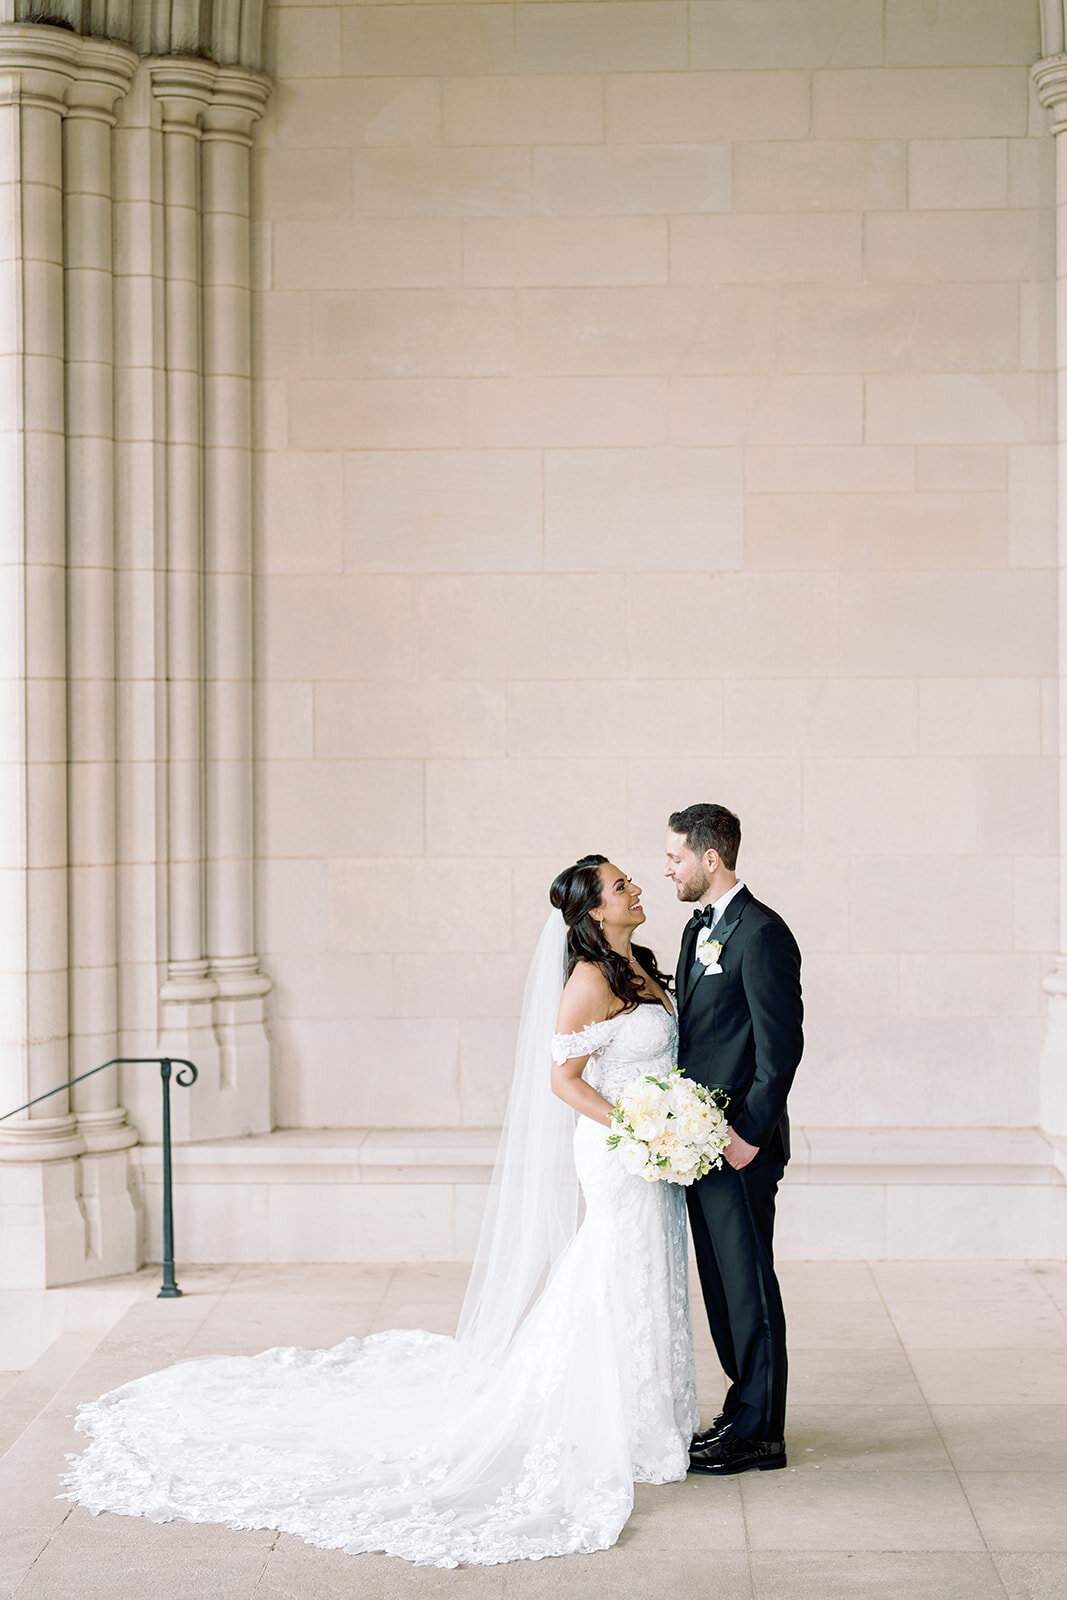 Klaire-Dixius-Photography-Salamander-DC-Washington-DC-wedding-national-cathedral-st-sophias-marios-suzy-highlights-45